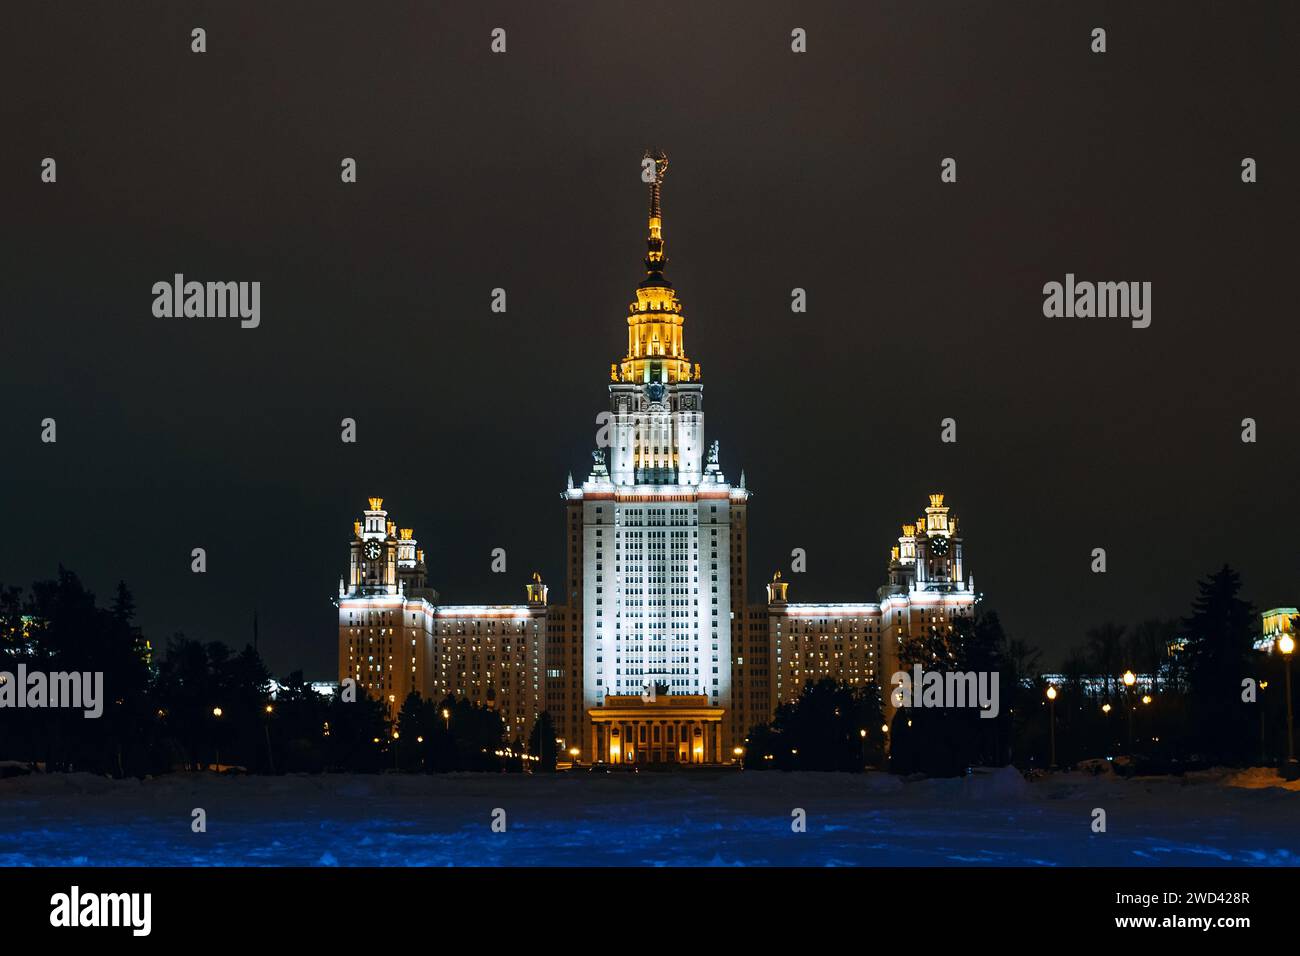 MOSCÚ, RUSIA - 25 DE DICIEMBRE de 2016: Lomonosov Universidad Estatal de Moscú, Rusia Foto de stock